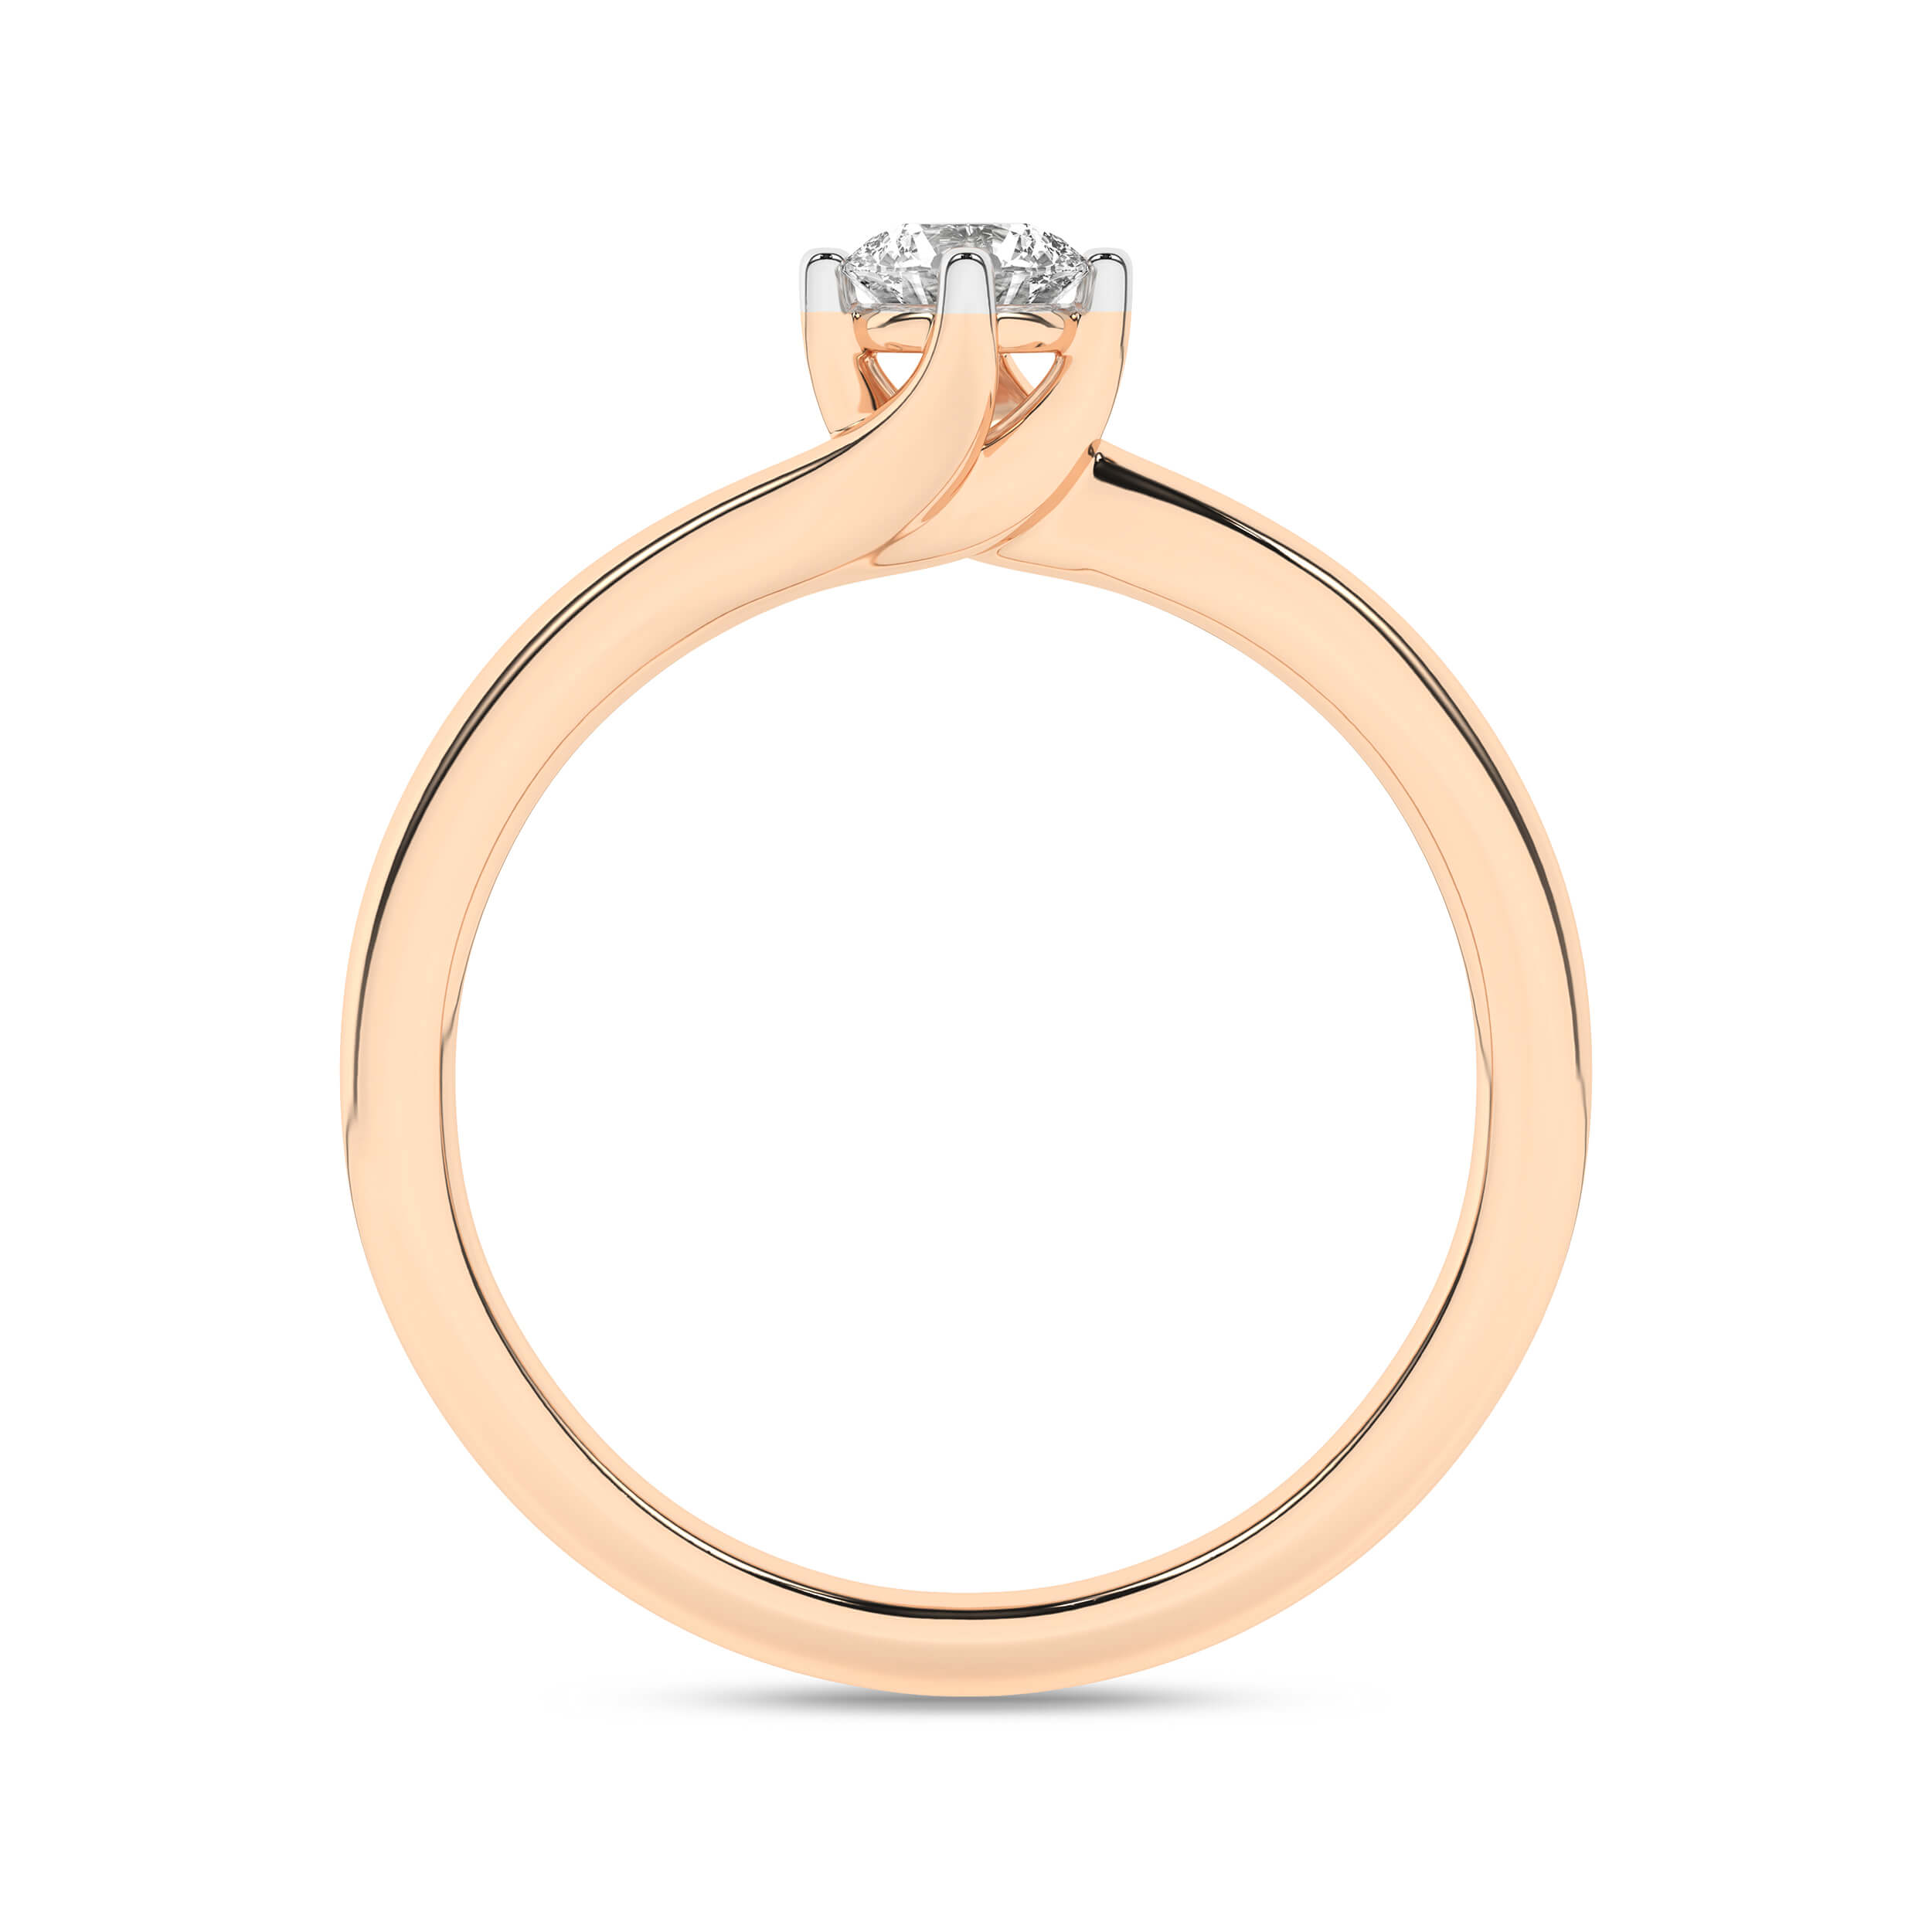 Inel de logodna din Aur Roz 14K cu Diamant 0.25Ct, articol RS0608, previzualizare foto 2